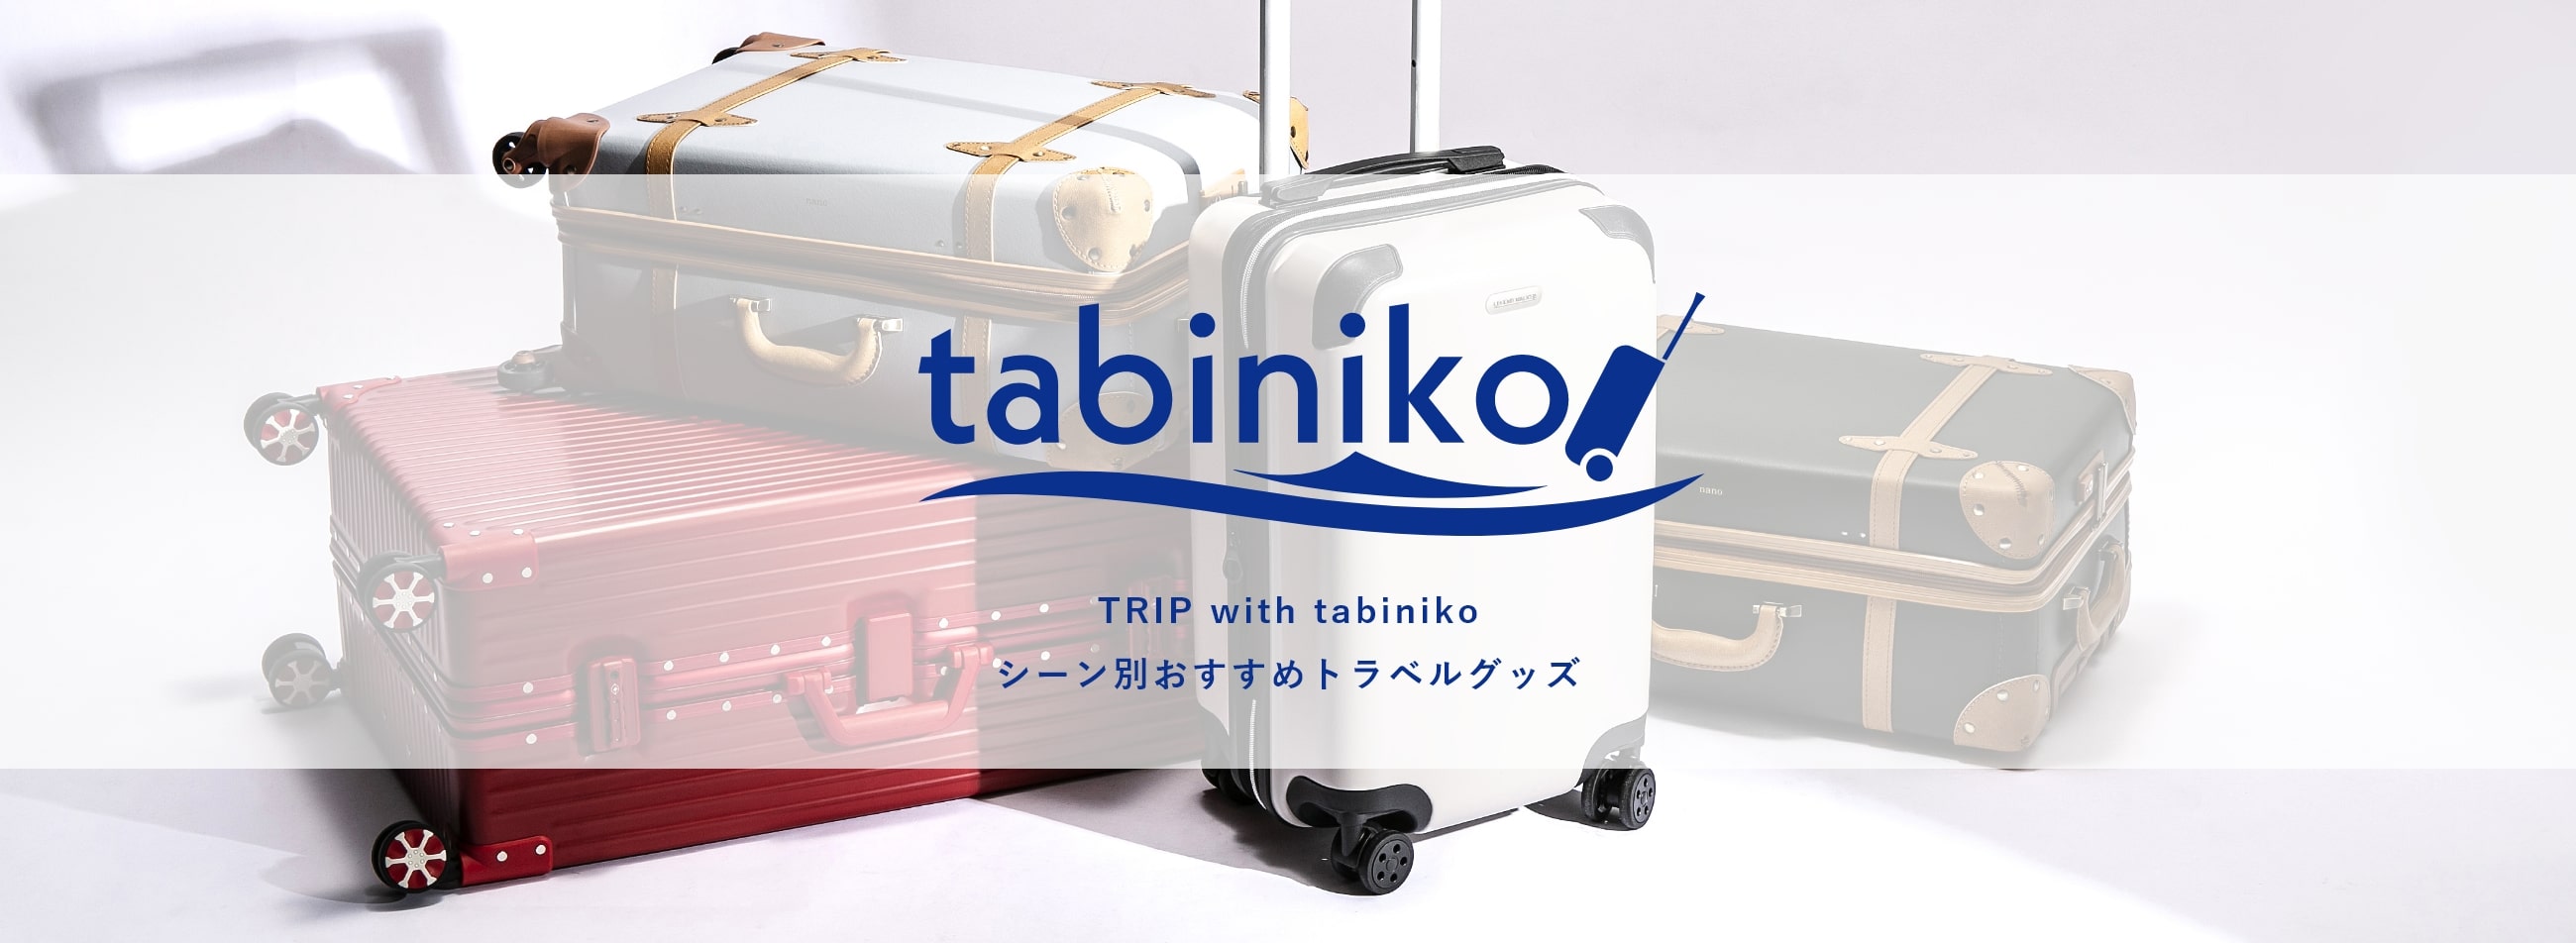 tabiniko TRIP with tabiniko シーン別おすすめトラベルグッズ